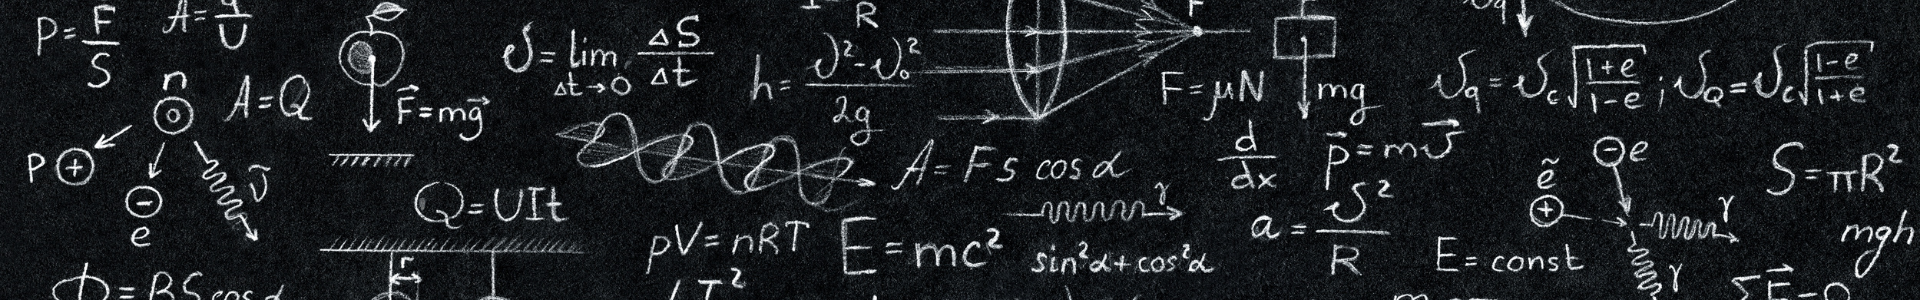 math equations on chalkboard